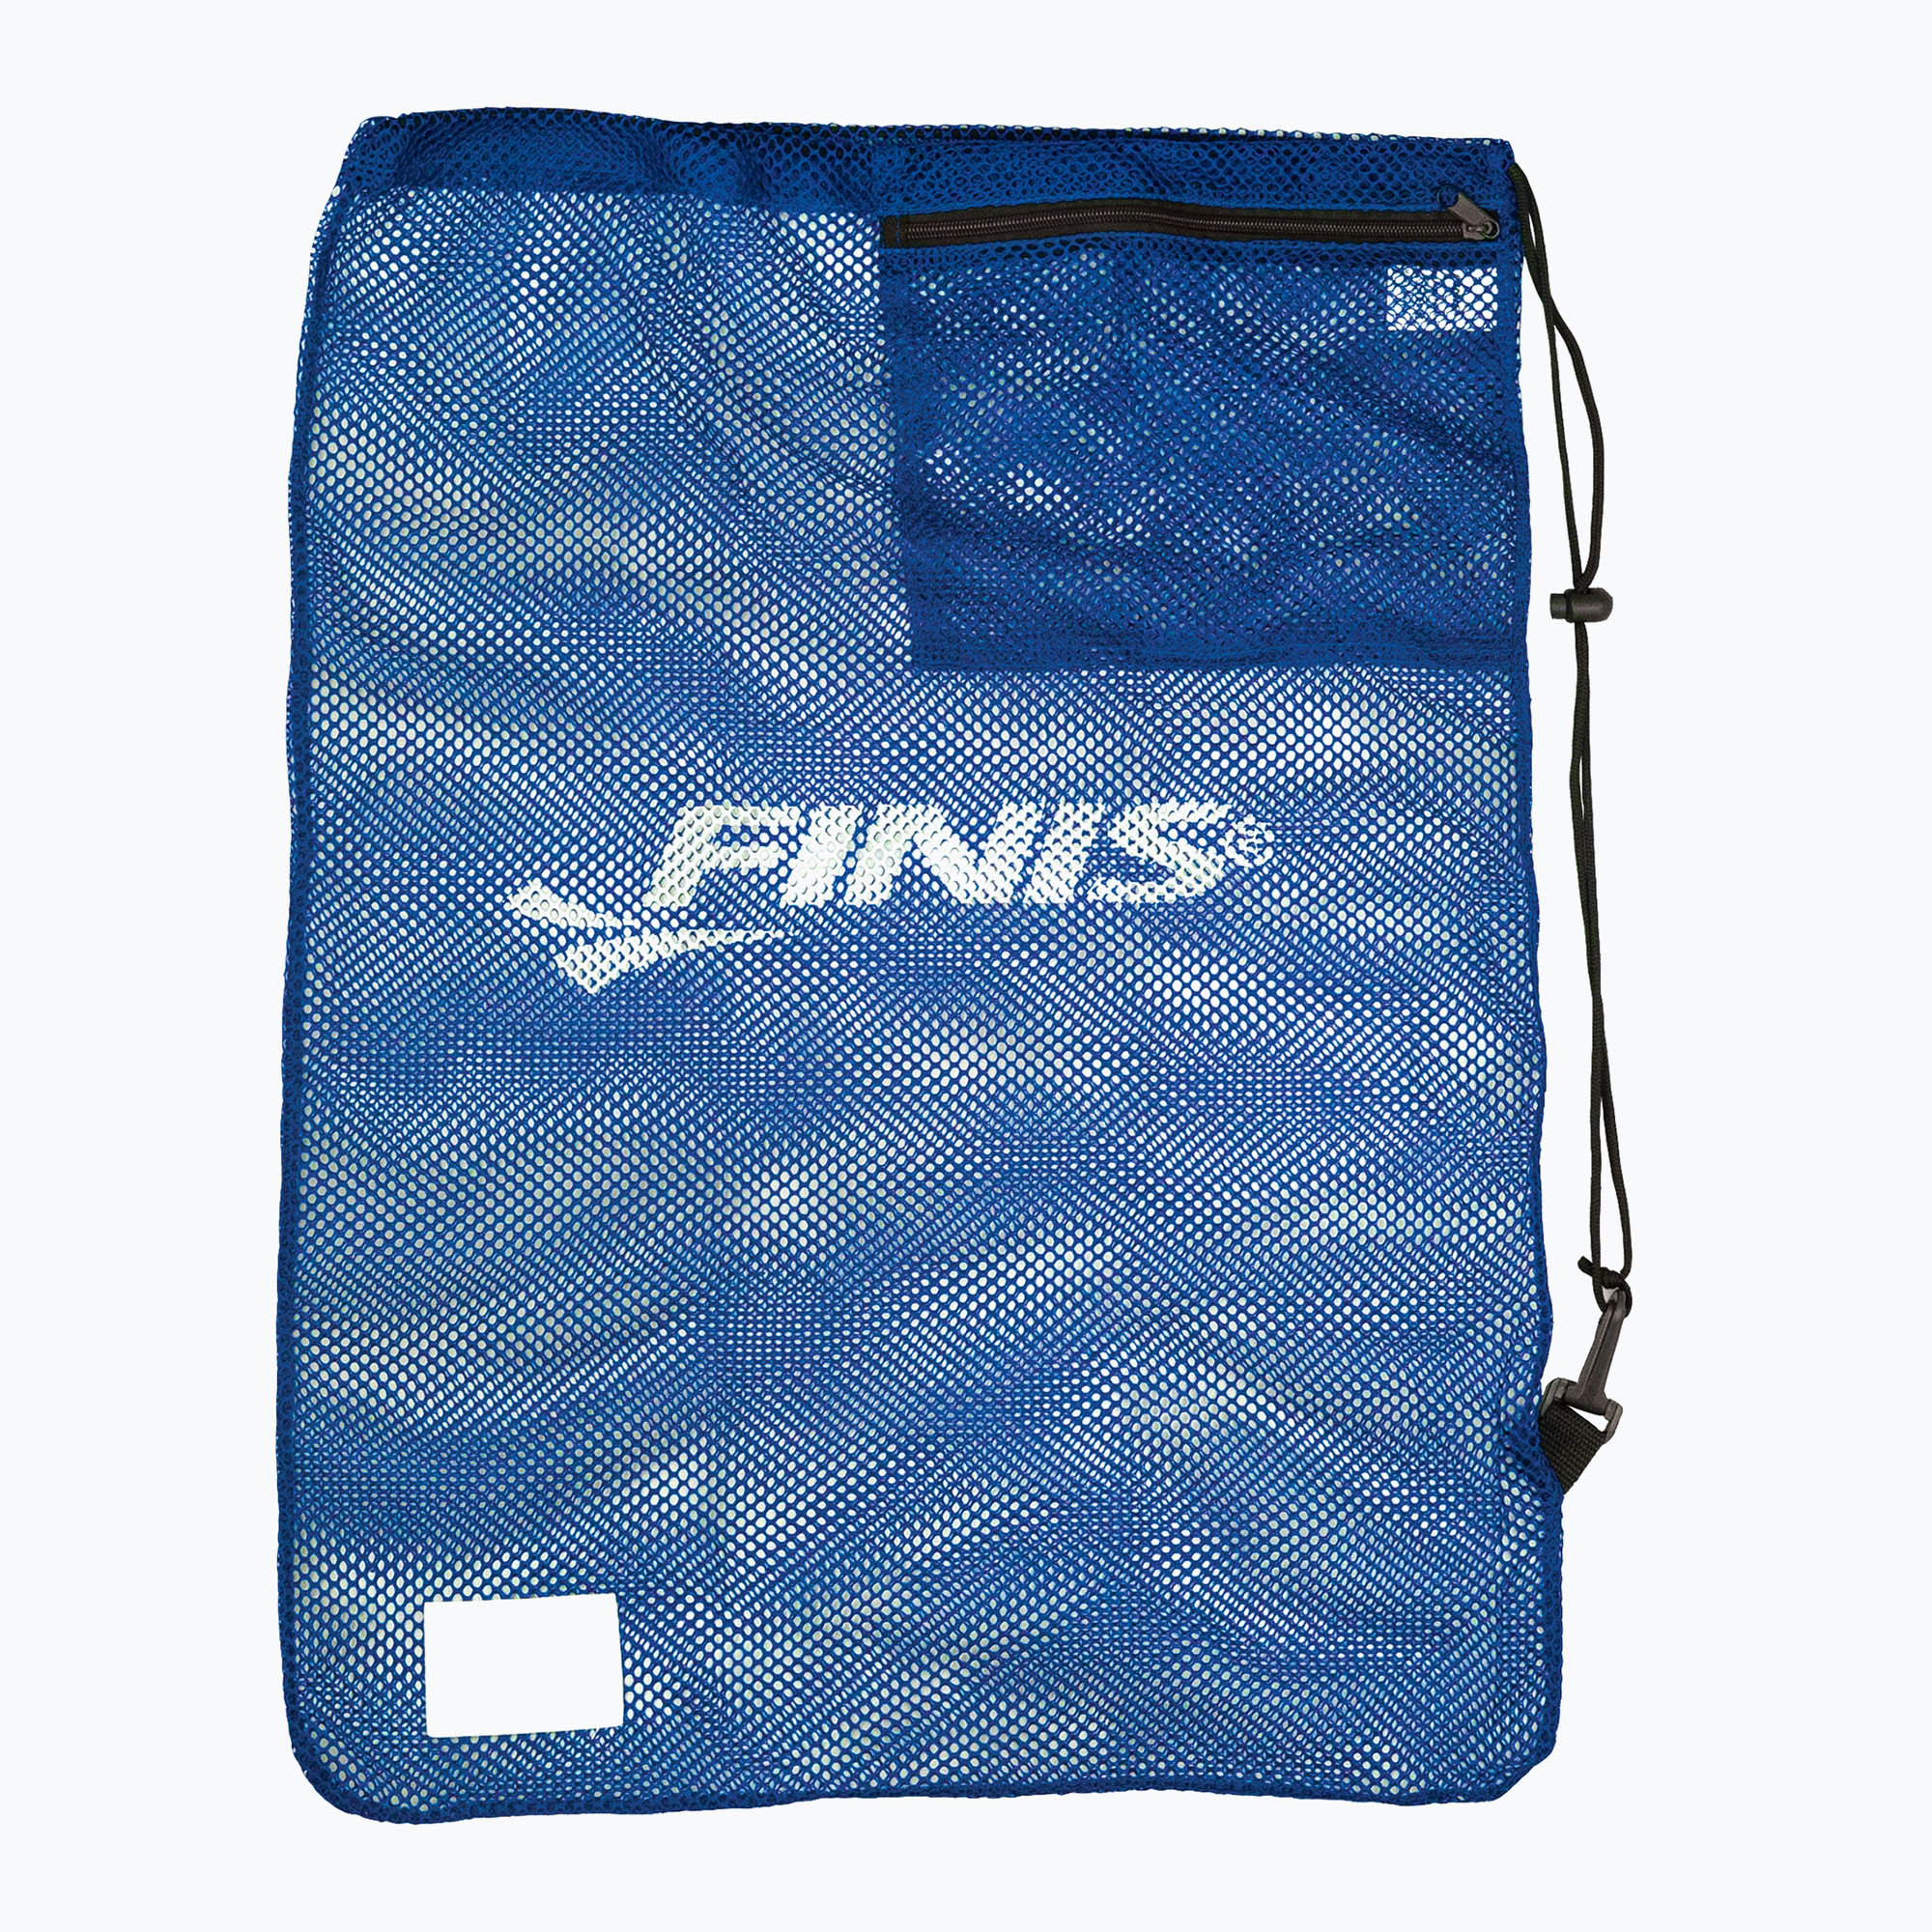 FINIS Mesh Gear Bag navy blue 1.25.26.16